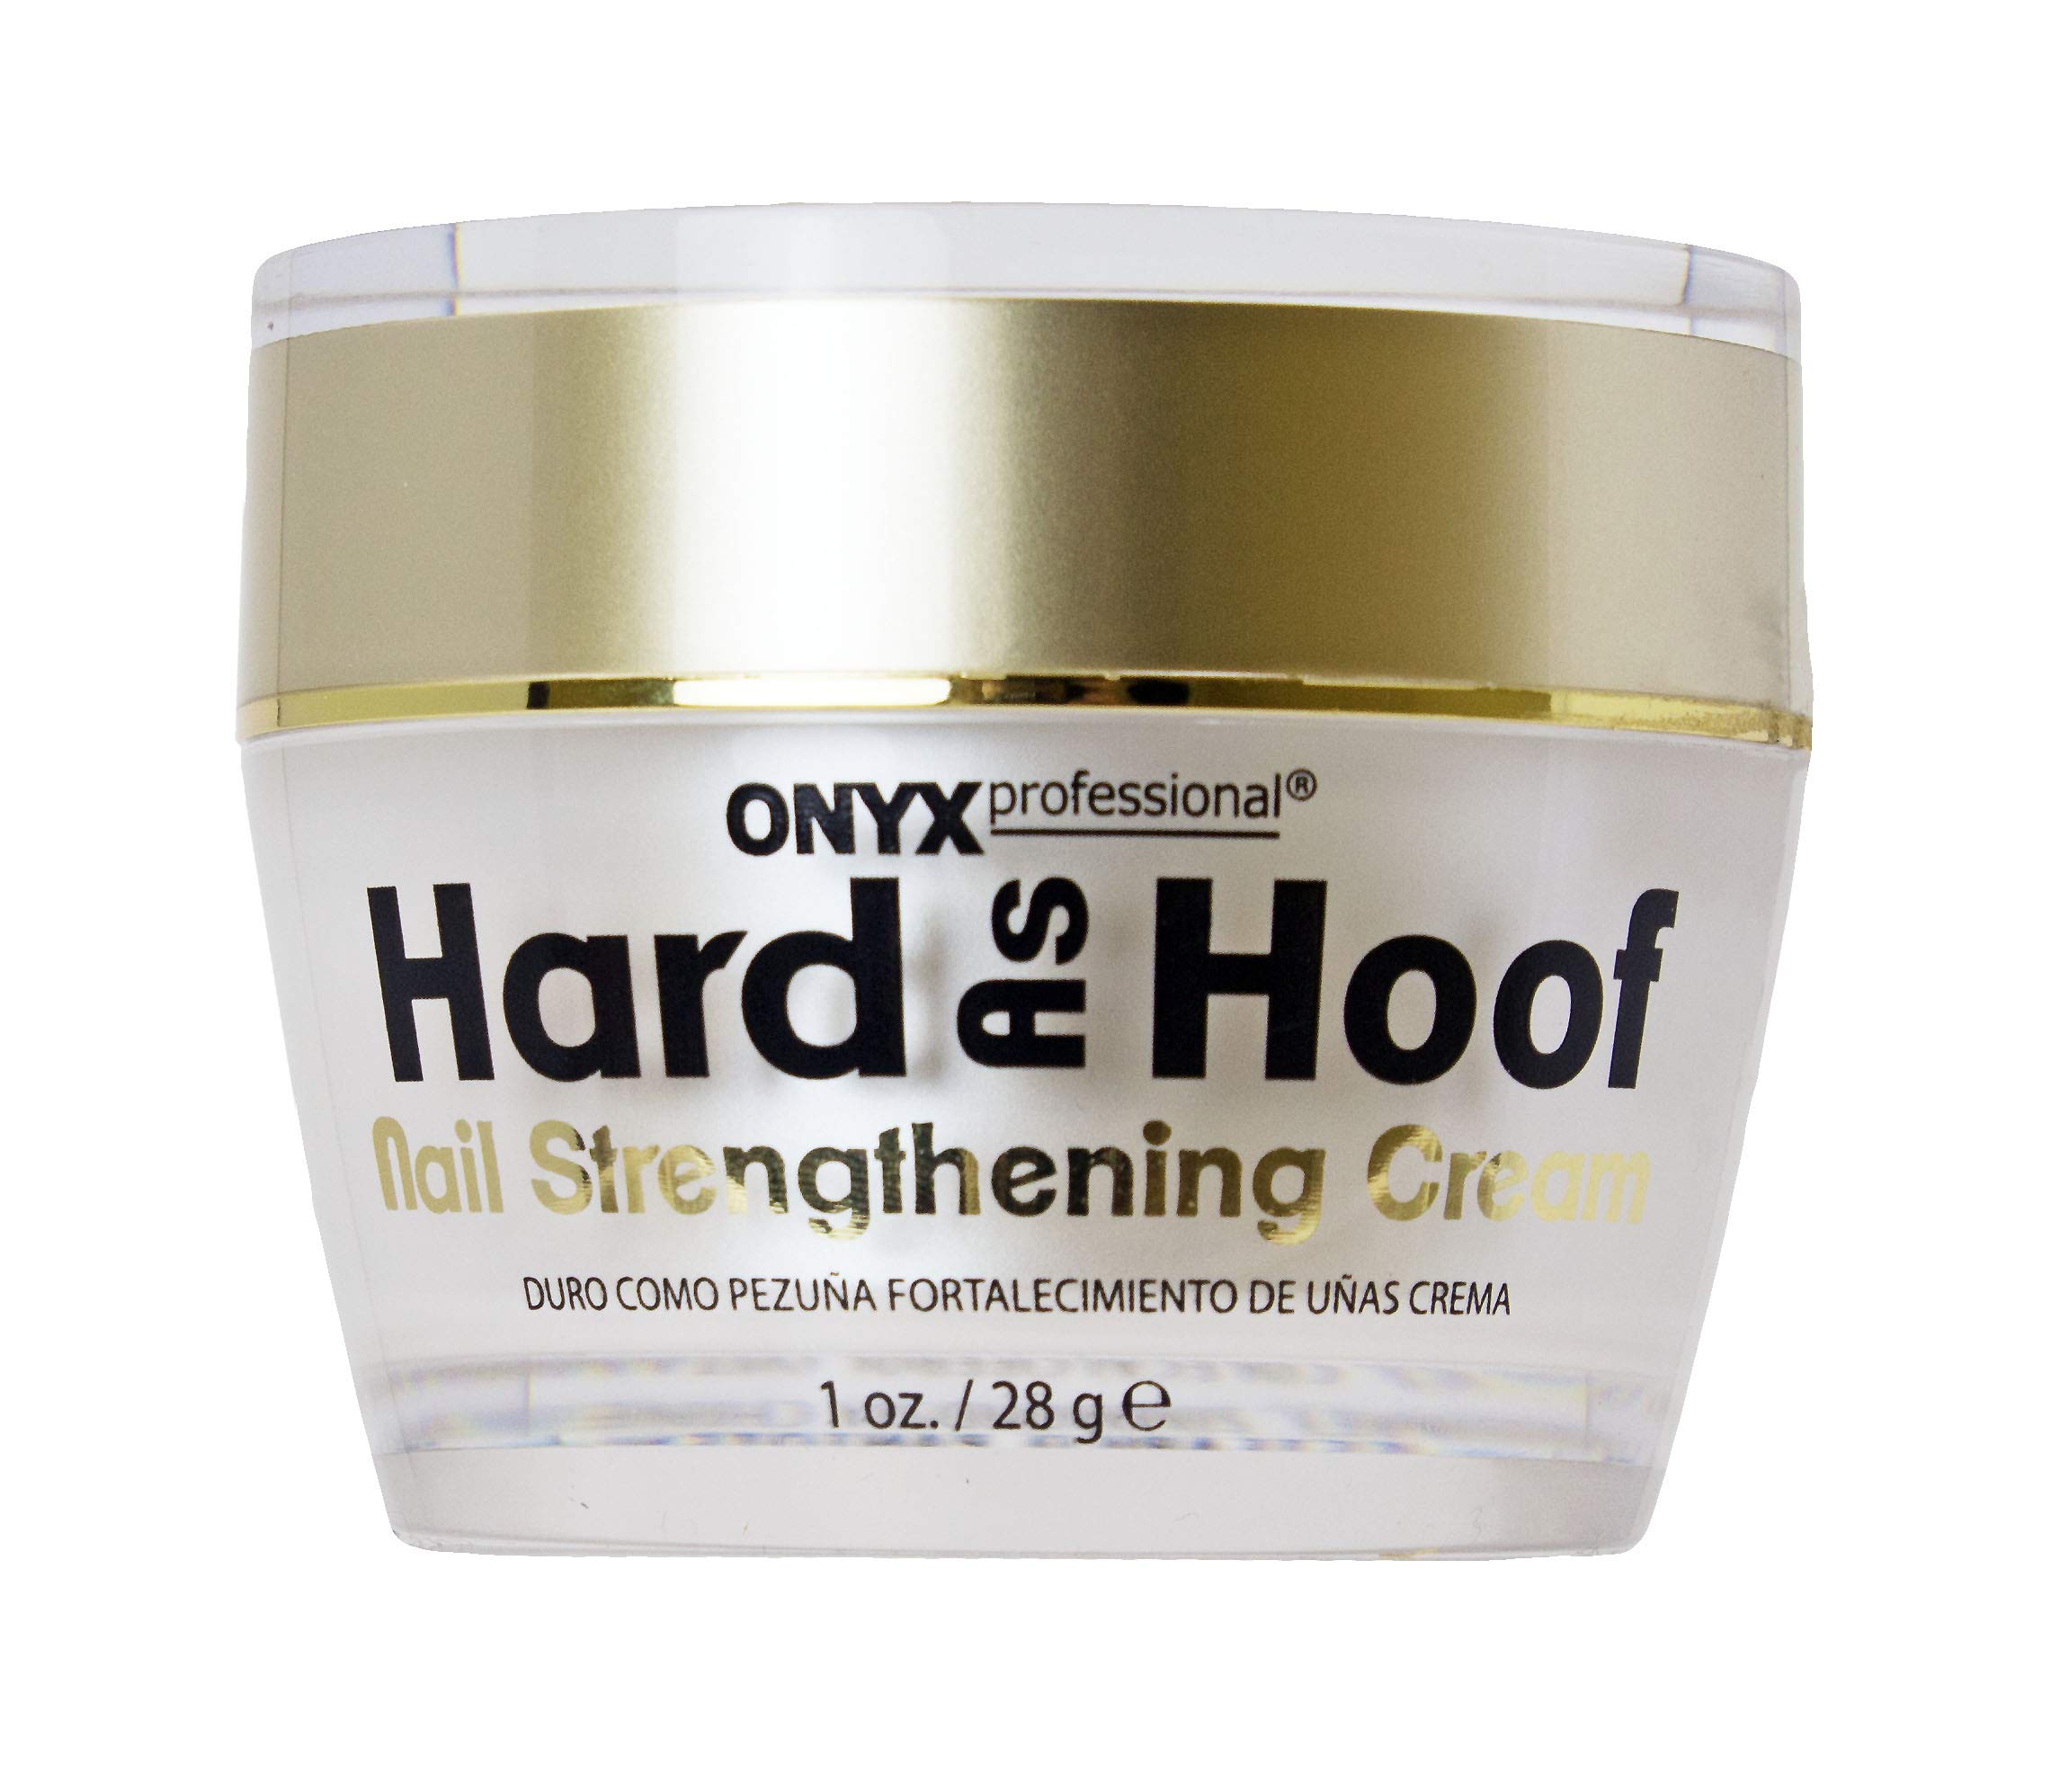 Hard As Hoof Nail Strengthening Cream, 1 oz